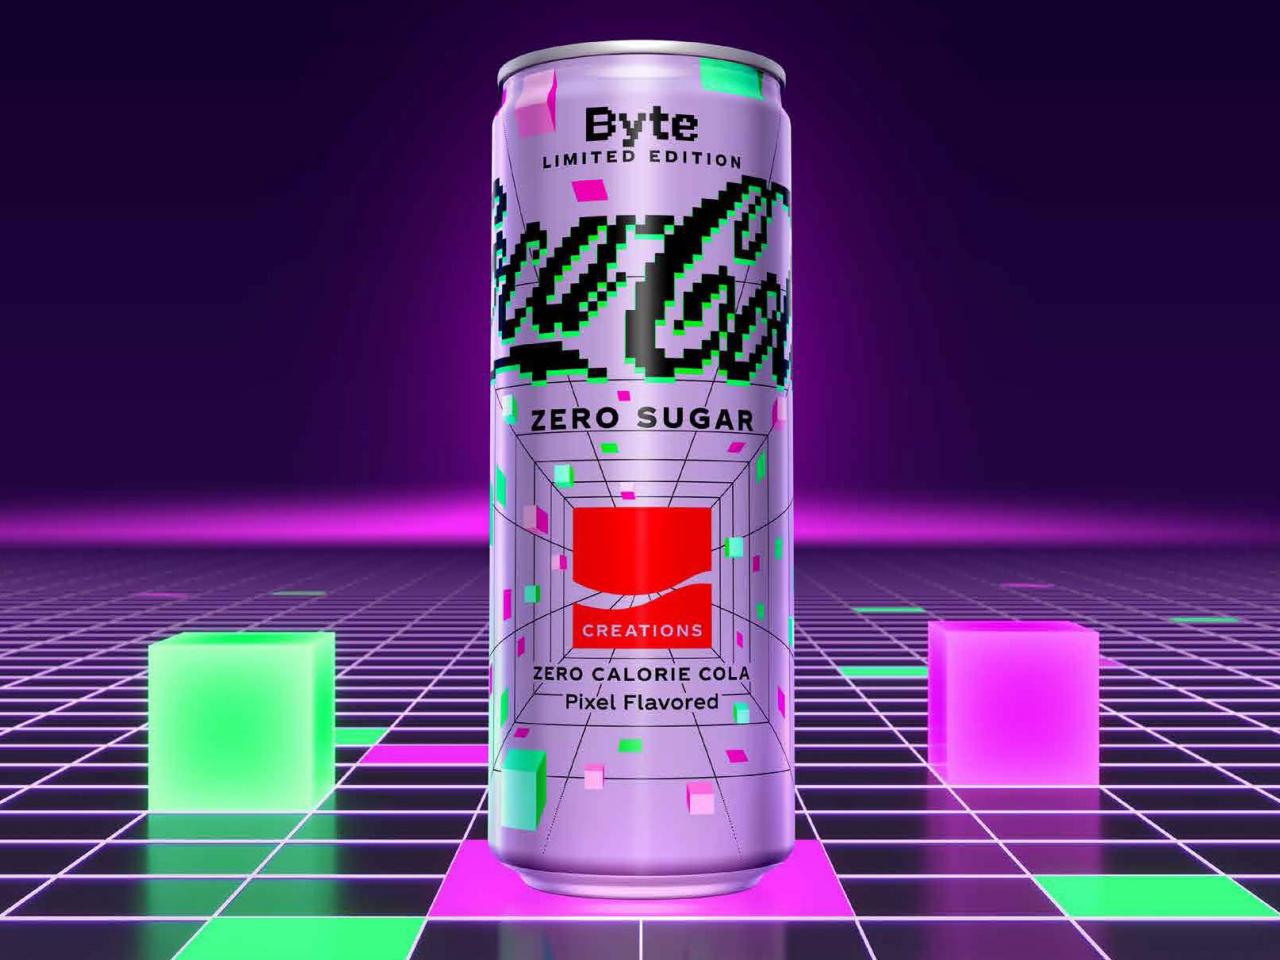 Coca Cola Zero Can-Soft Drinks